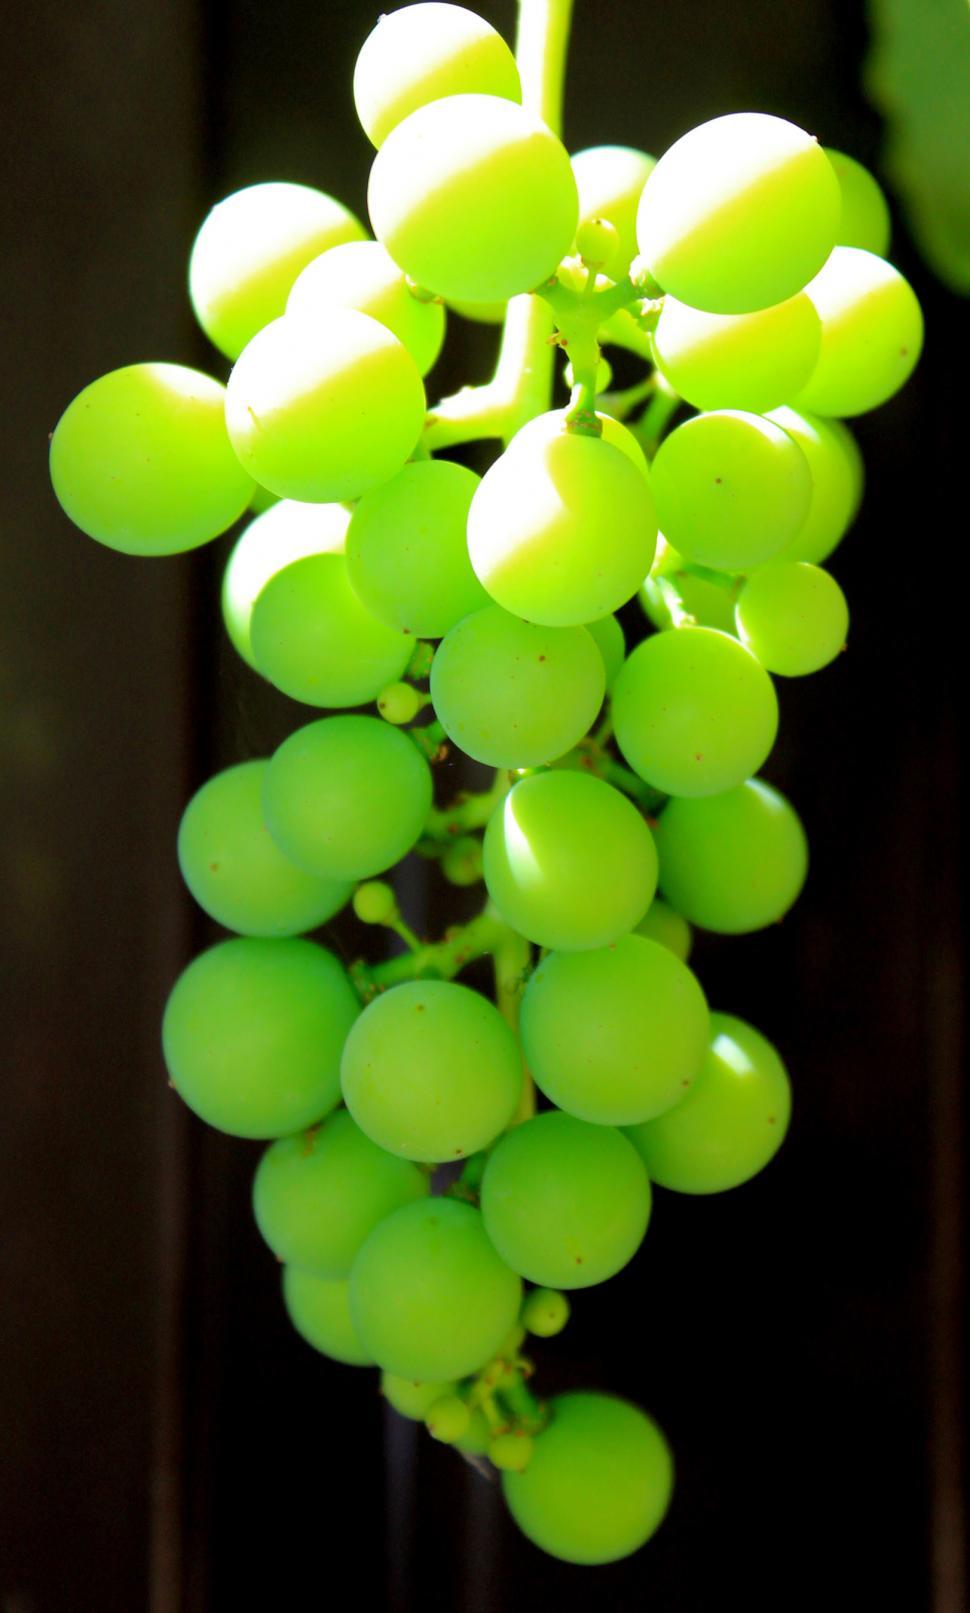 Free Image of Green Grapes 